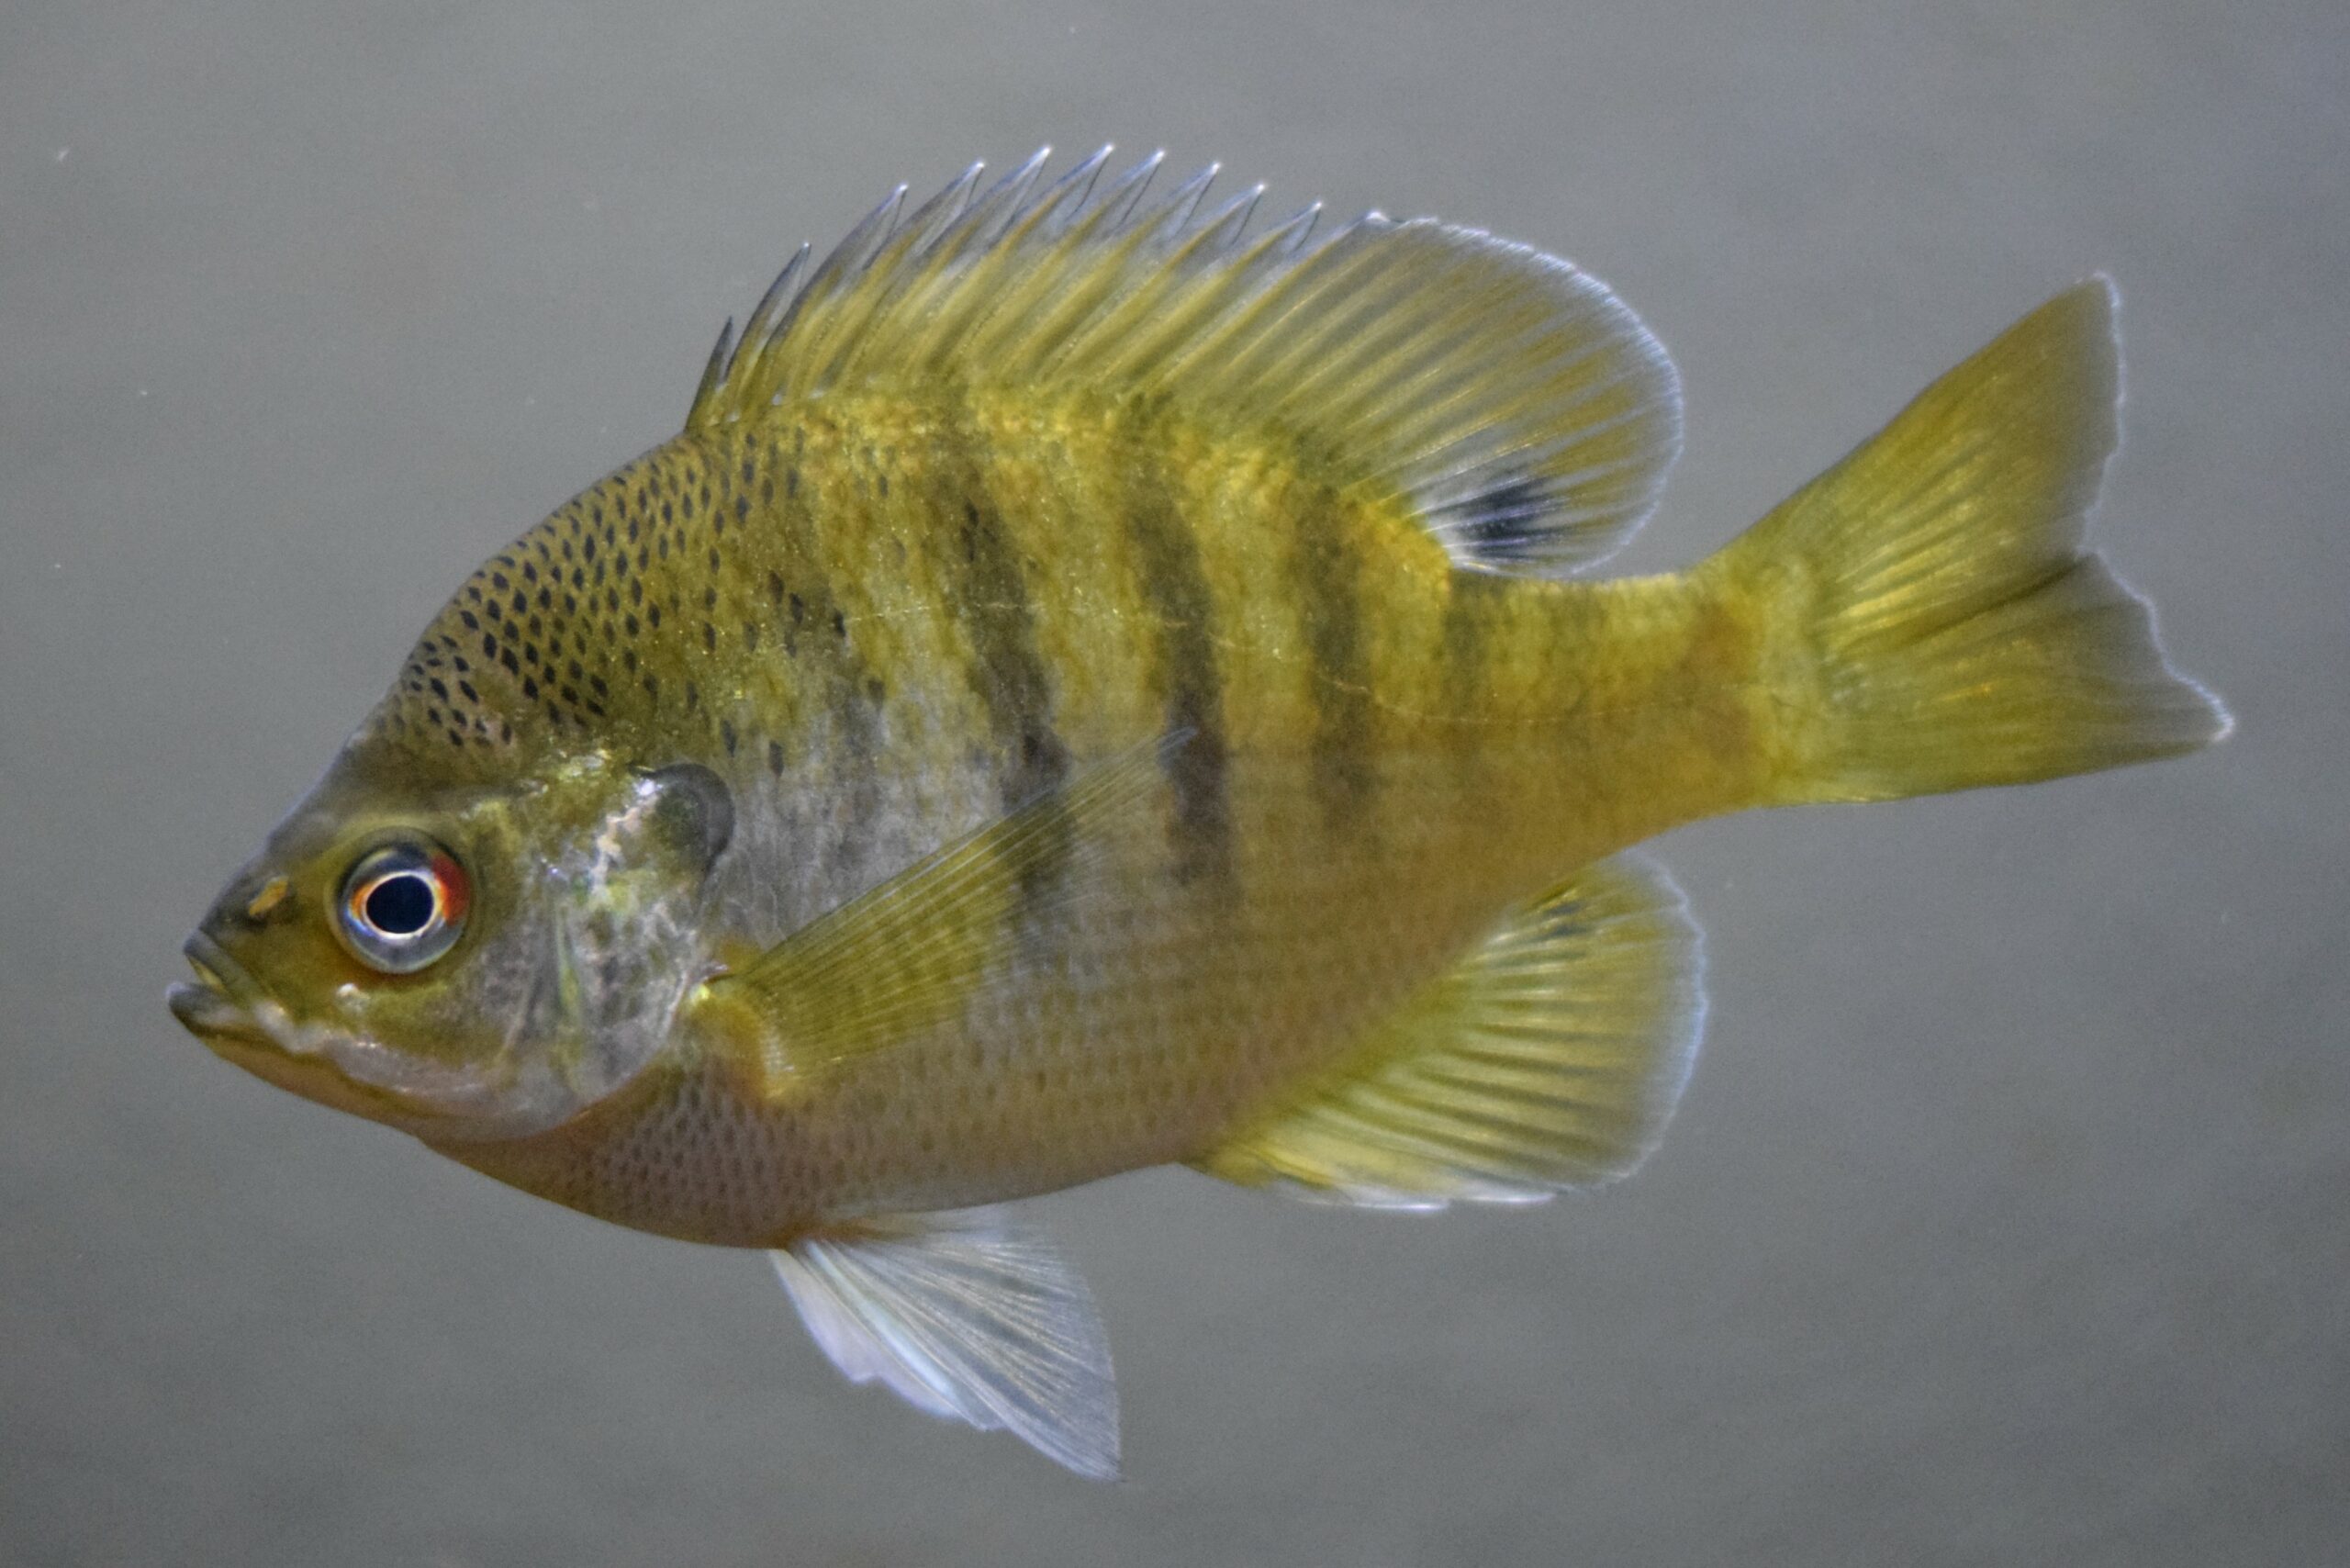 State fish of Illinois